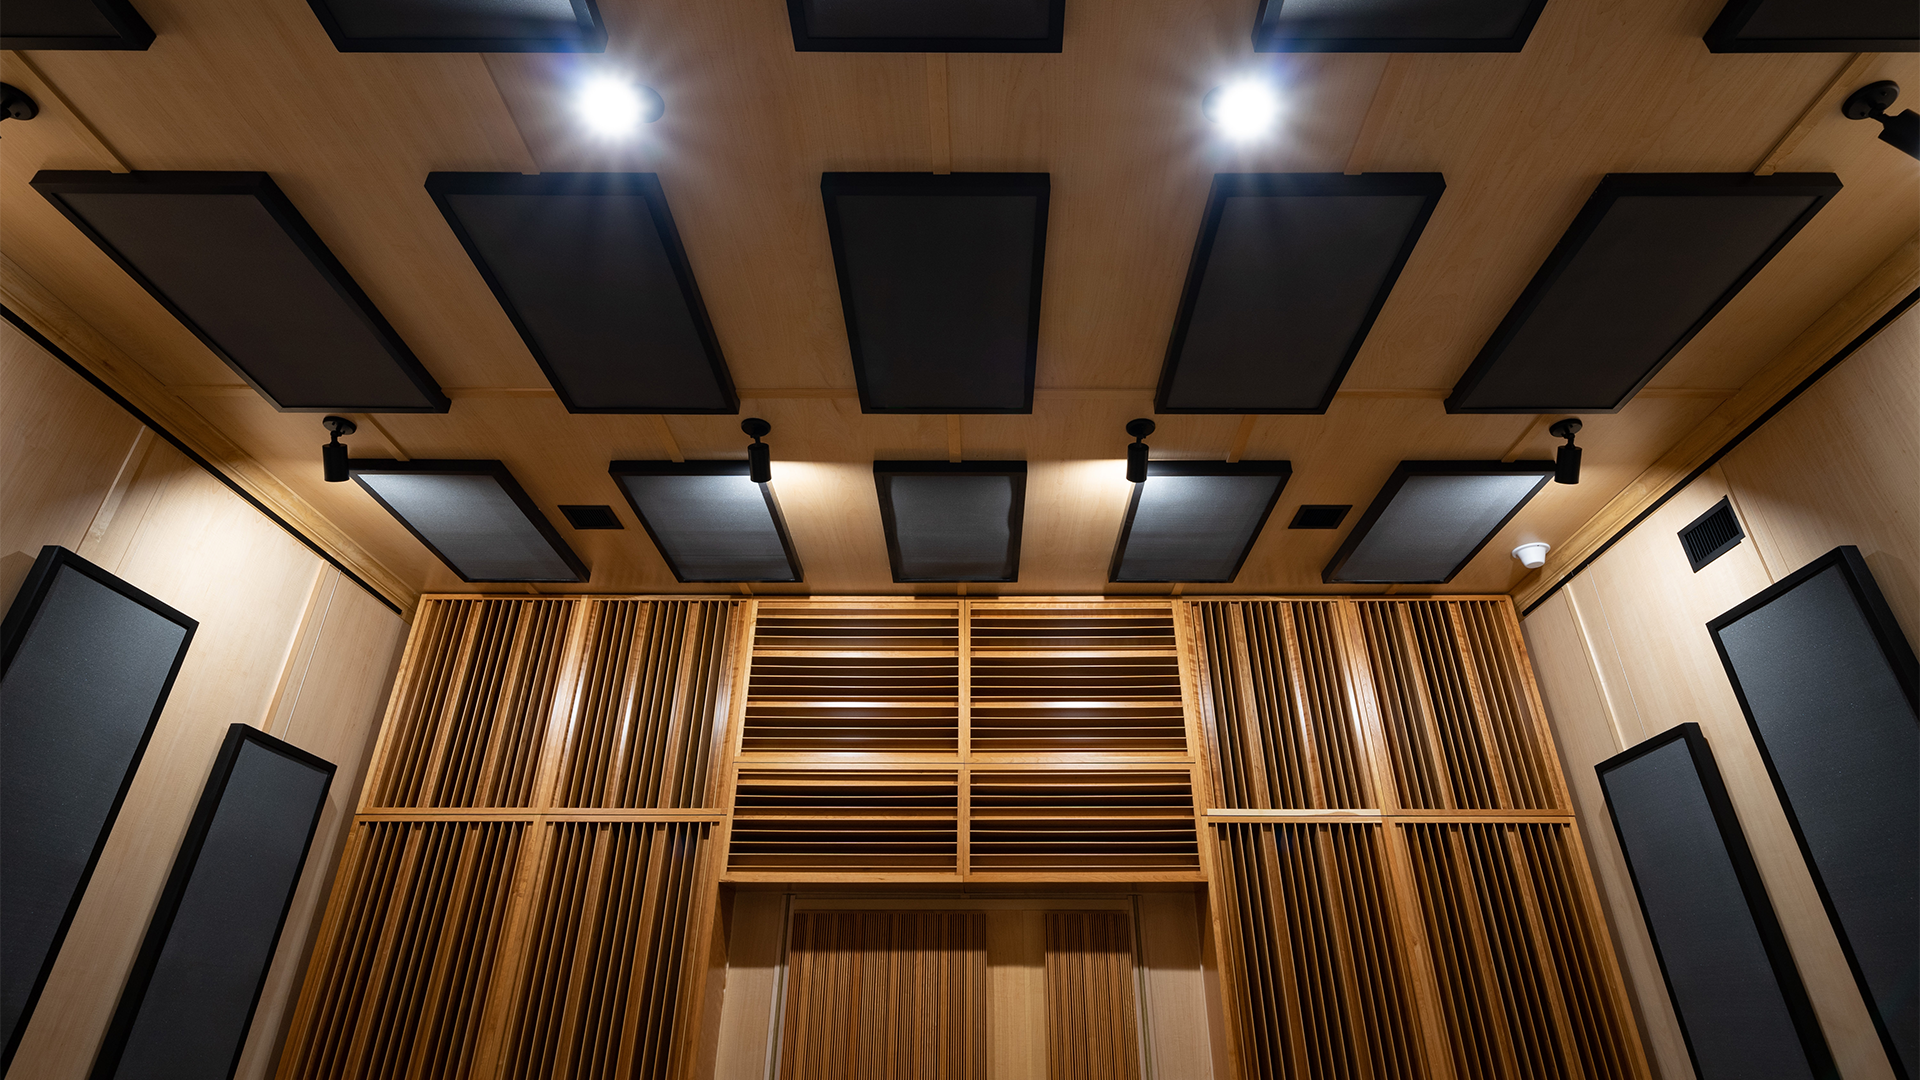 Acoustic panel - Wikipedia